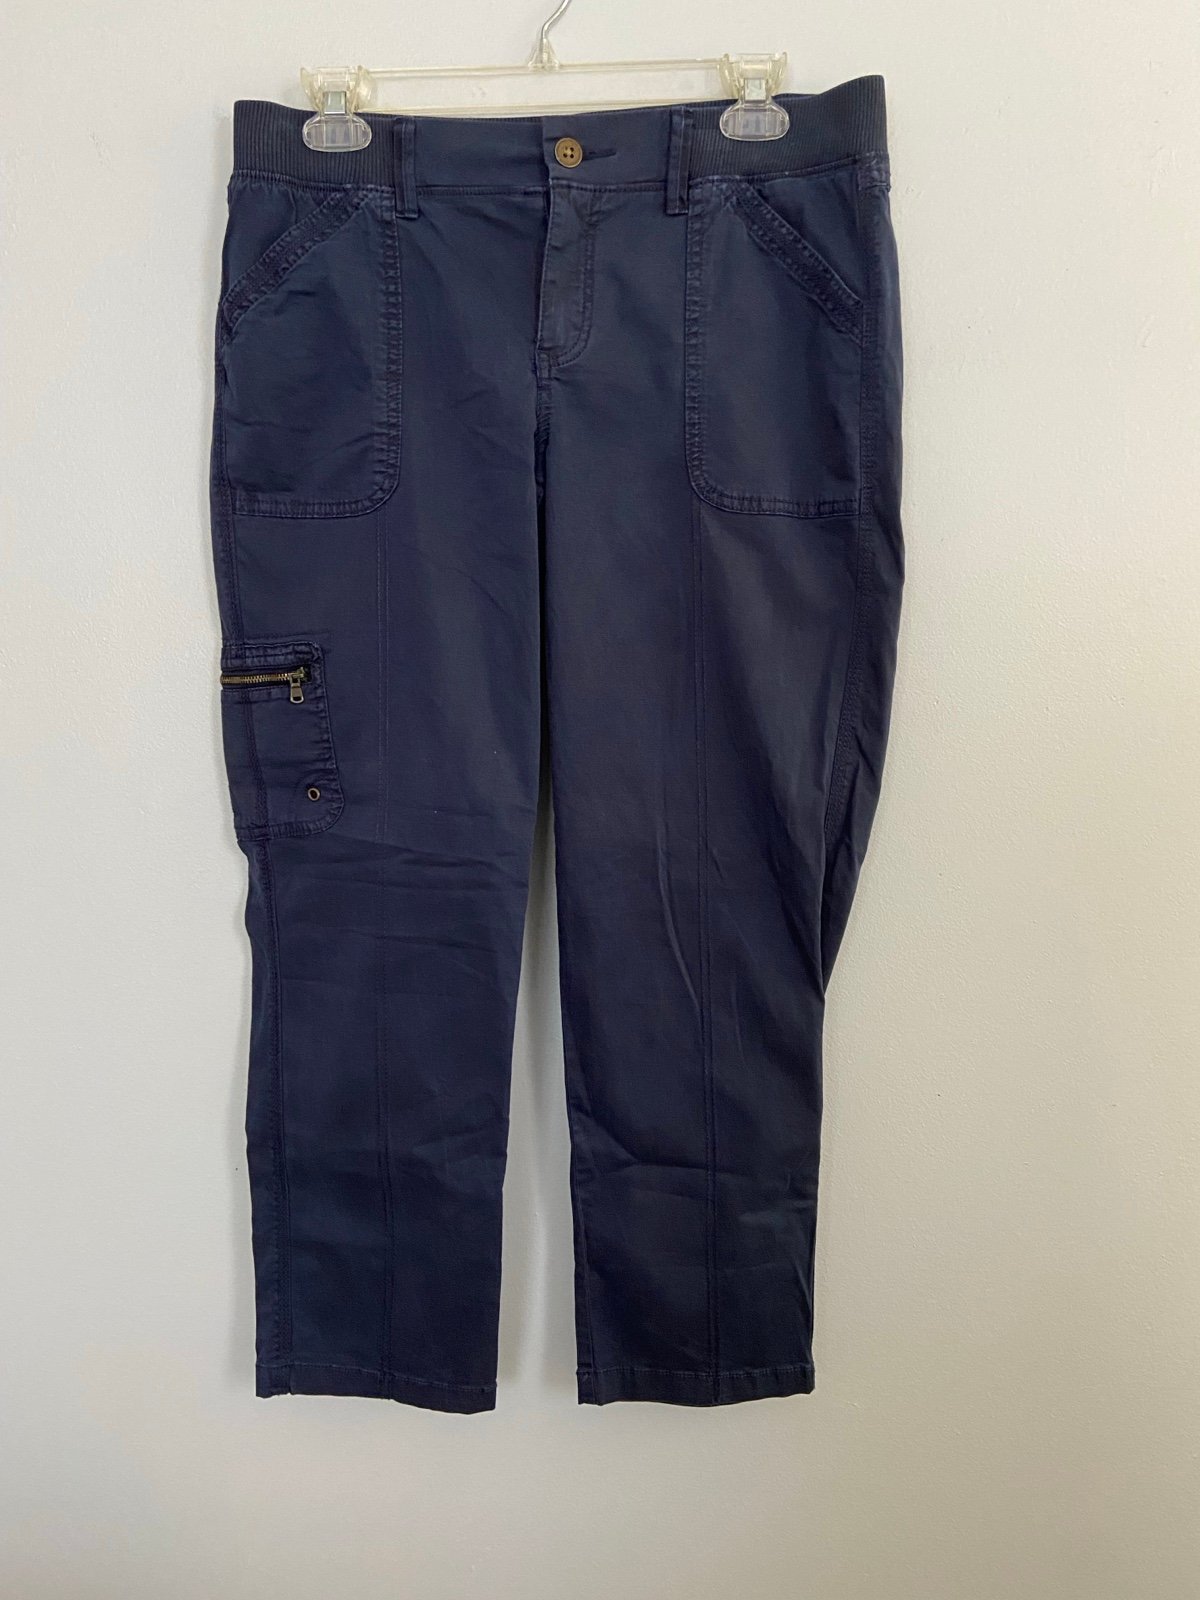 Wholesale price Sonoma Blue Cropped Cargo/Utility Pants